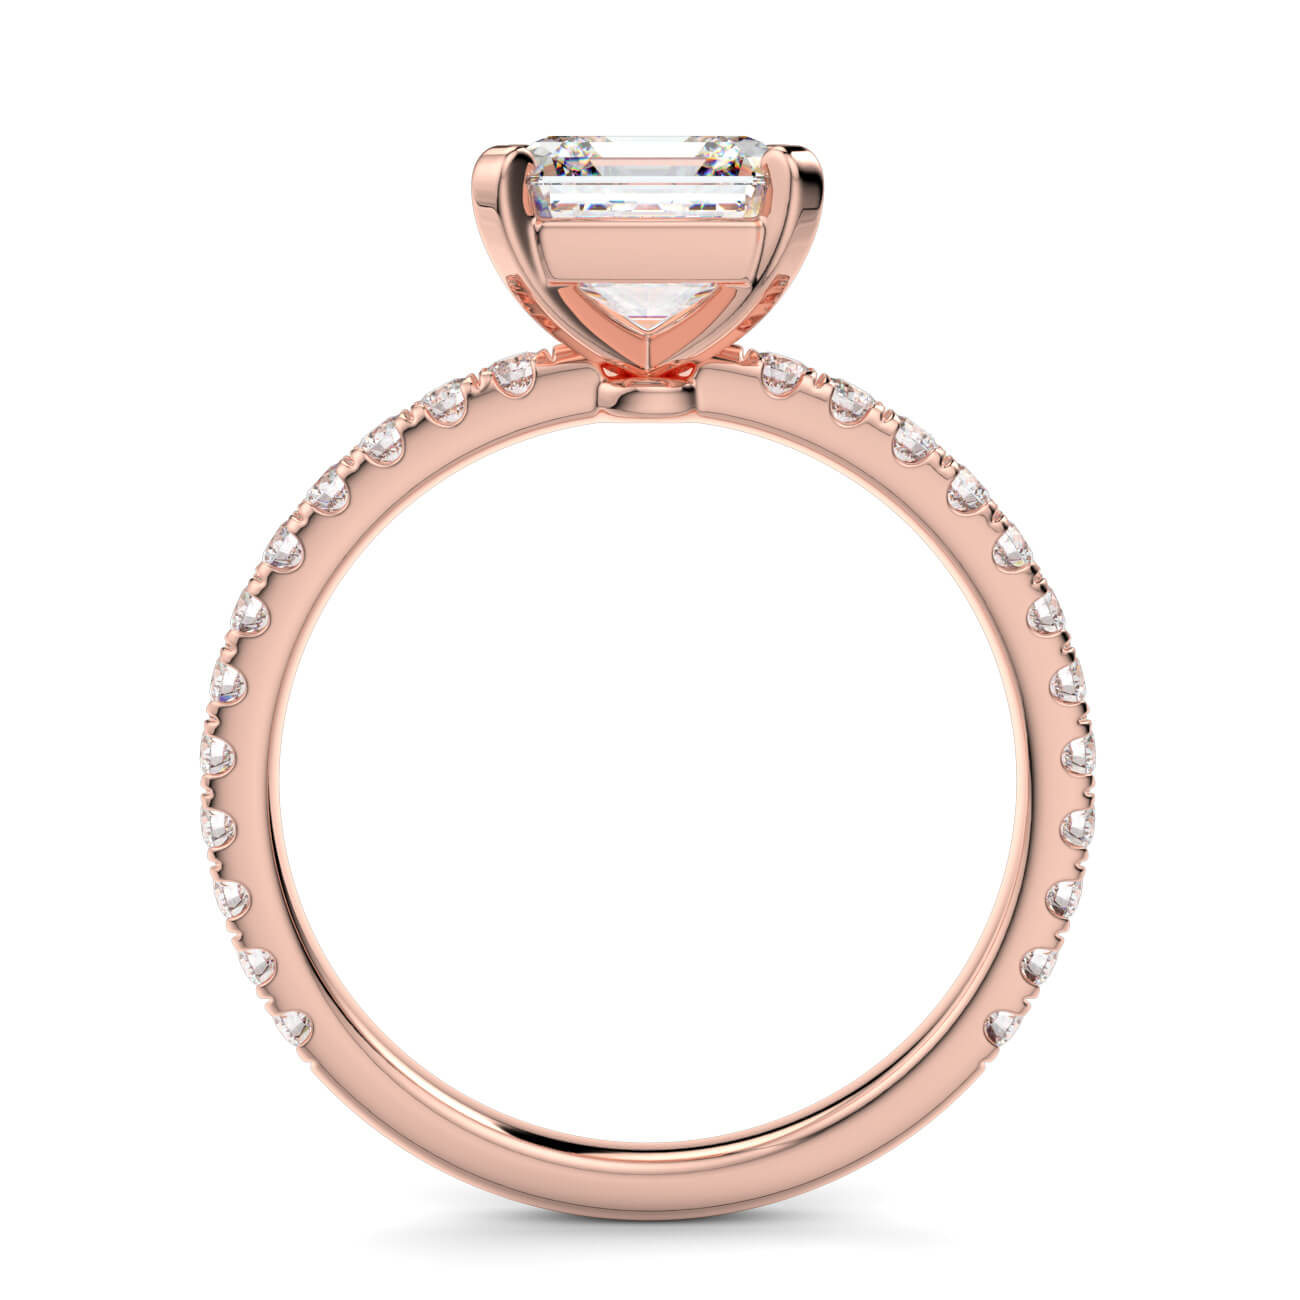 Delicate ‘Liat’ Asscher Cut Diamond Engagement Ring in 18k Rose Gold – Australian Diamond Network